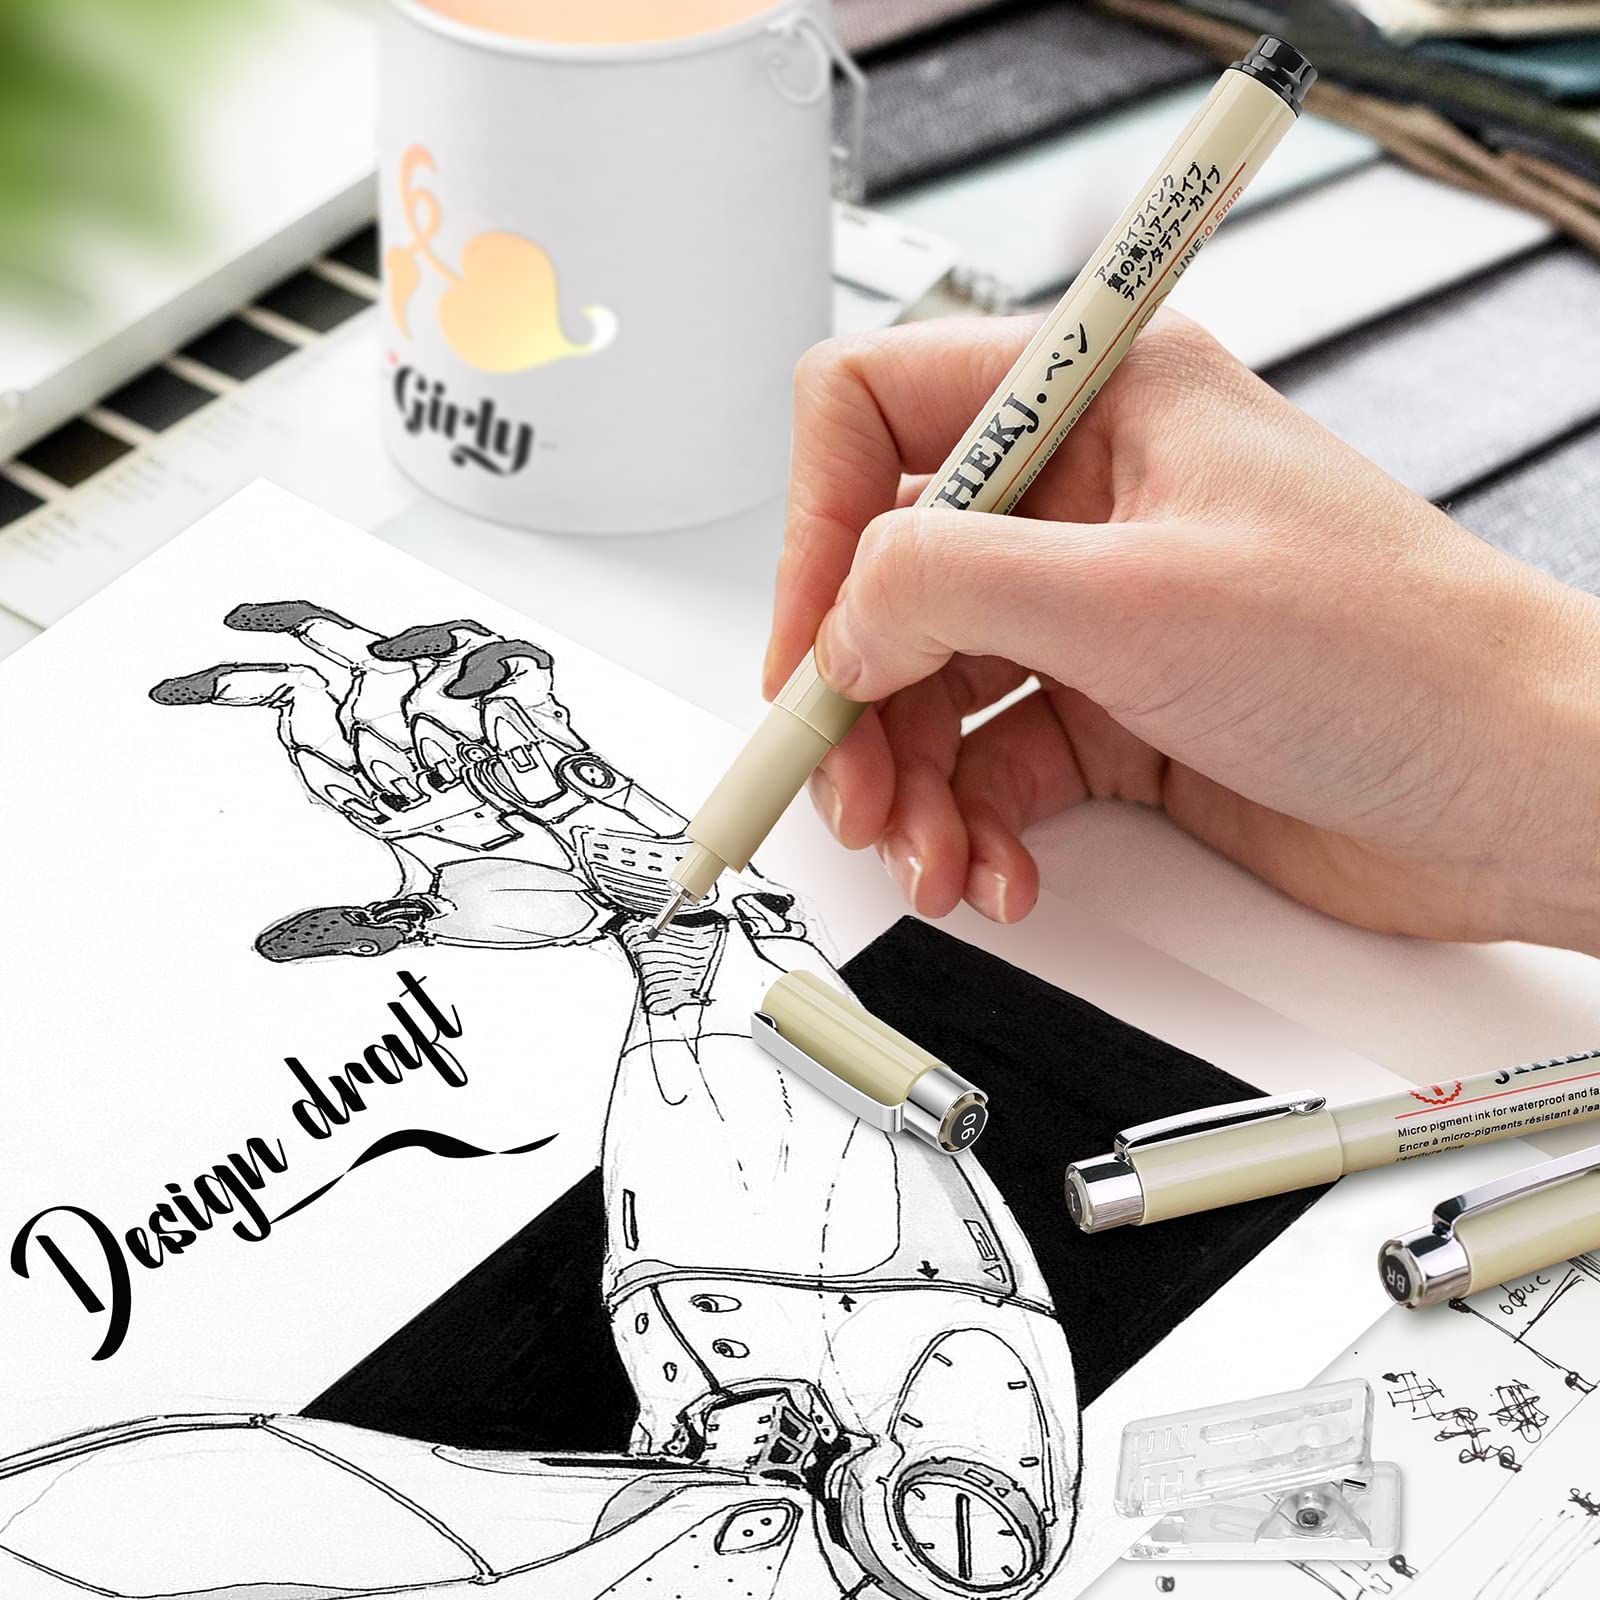 Pen, Pens, Art Pens, Drawing Pens, Fine Point Pen, Micro-Pen, Sketch Pen, Anime Pens, Micro-Pen Set, Micro-Pens, For Art Supplies, Arts & crafts, Drawing Supplies, Office School Supplies, Artists Line